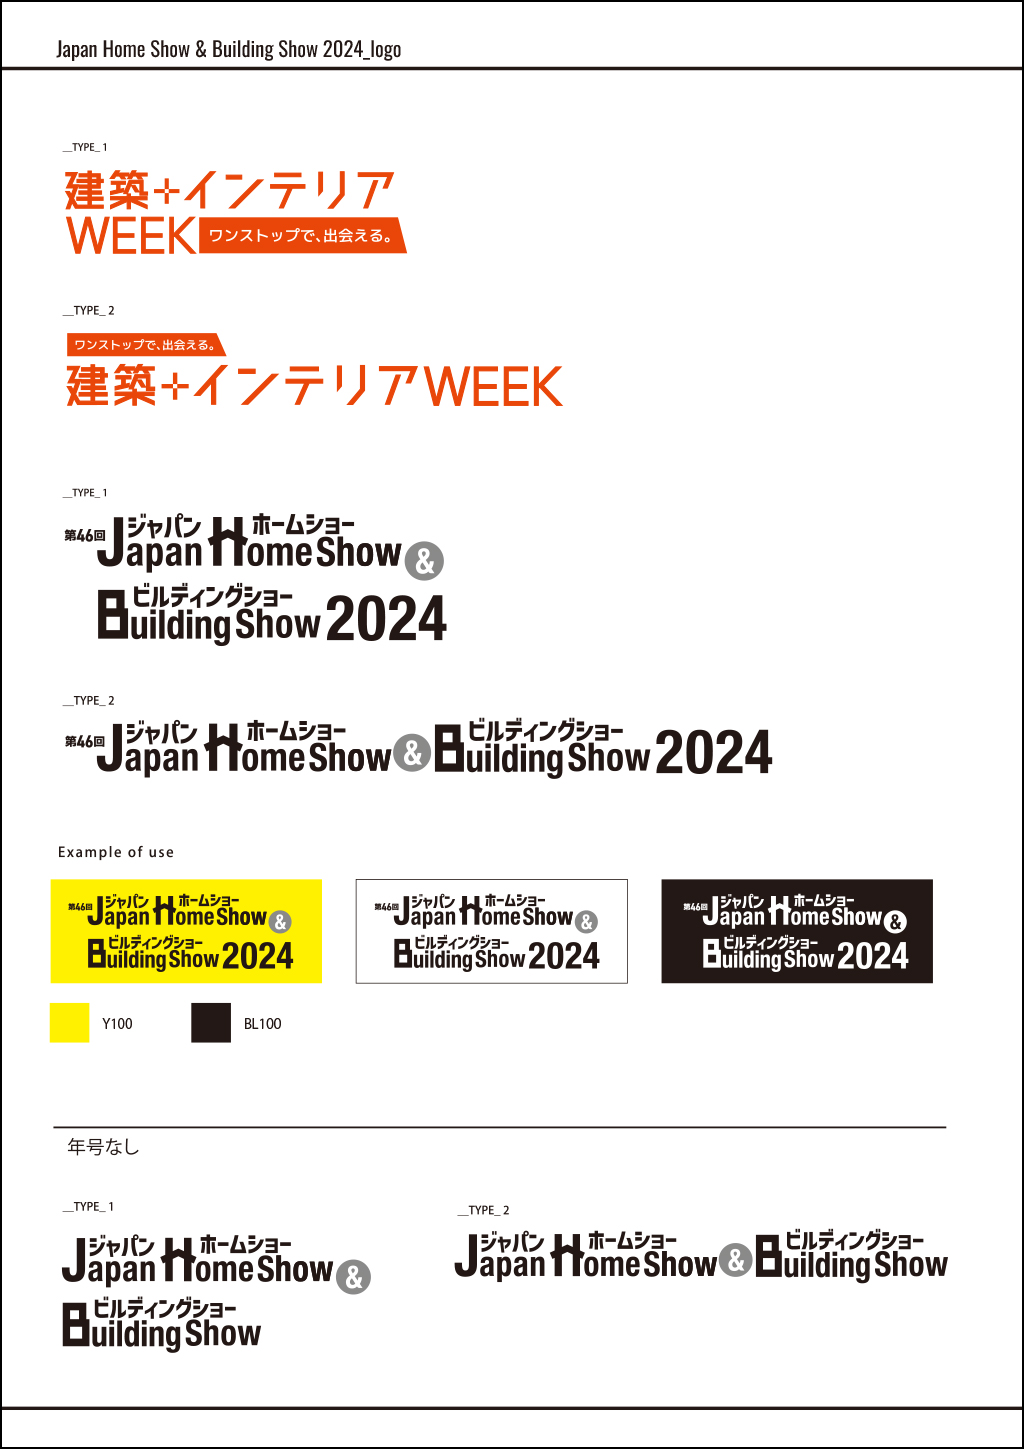 Japan Home & Building Show 2022 logos